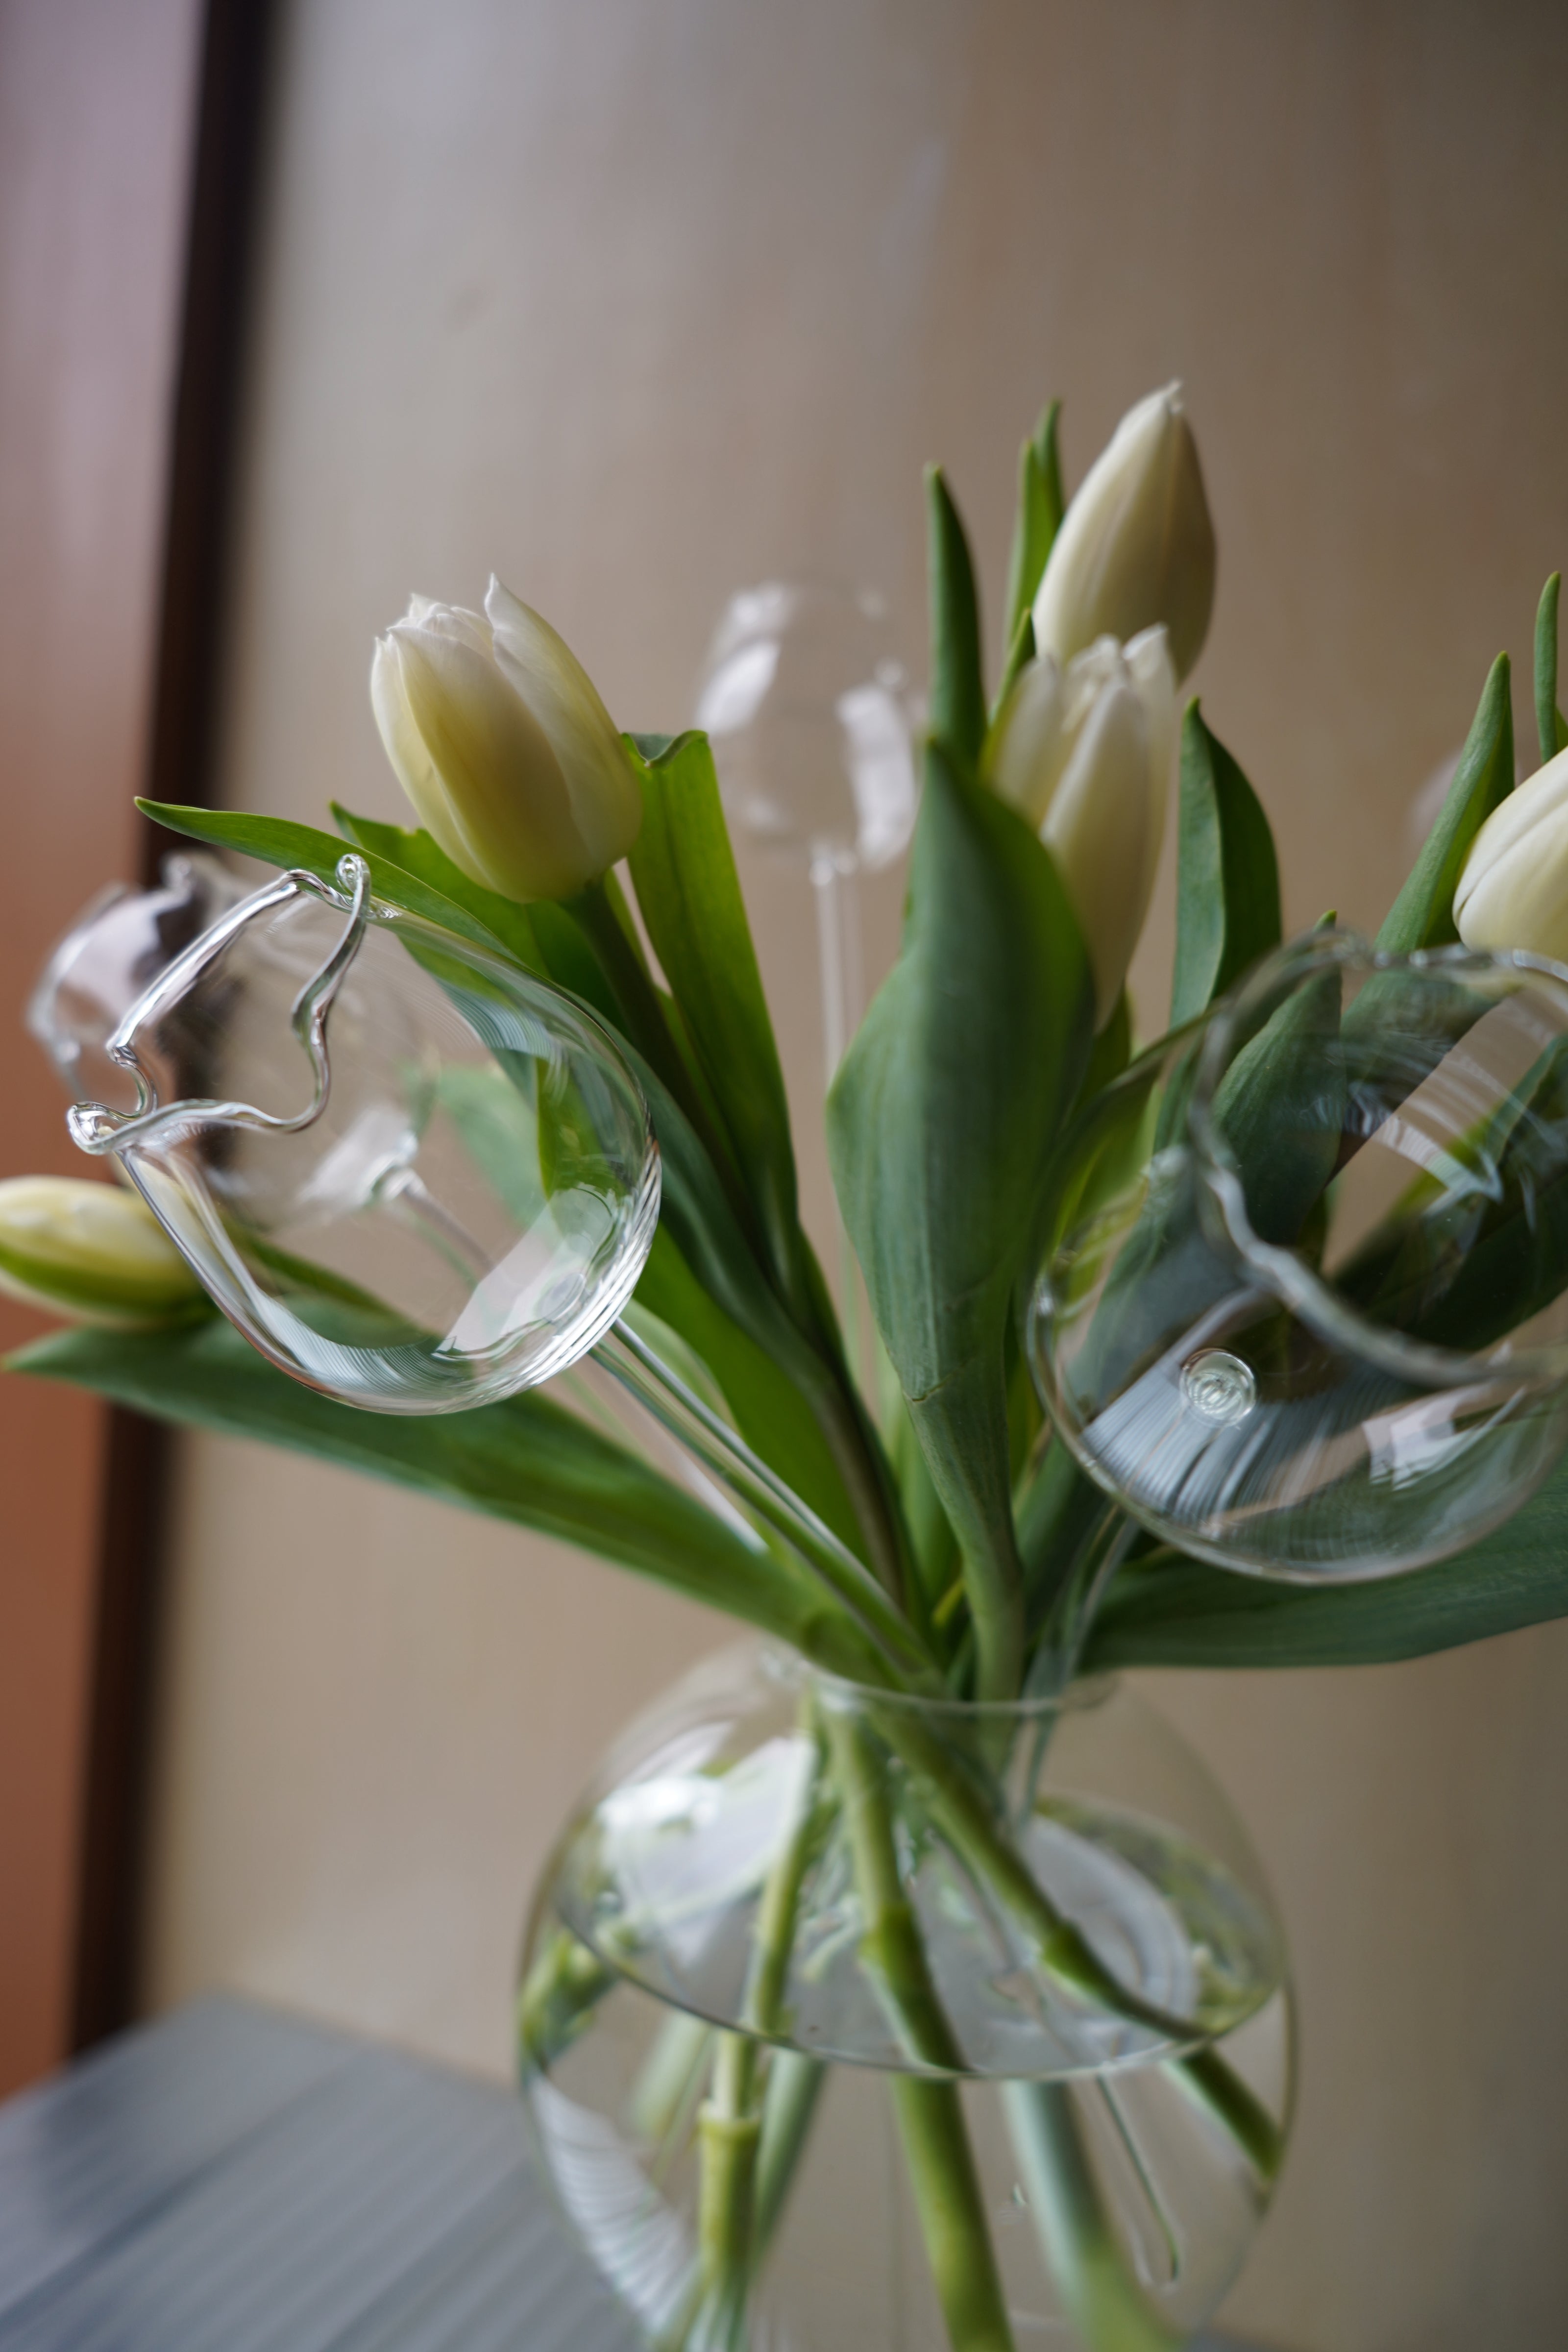 Glass flower "Tulip"